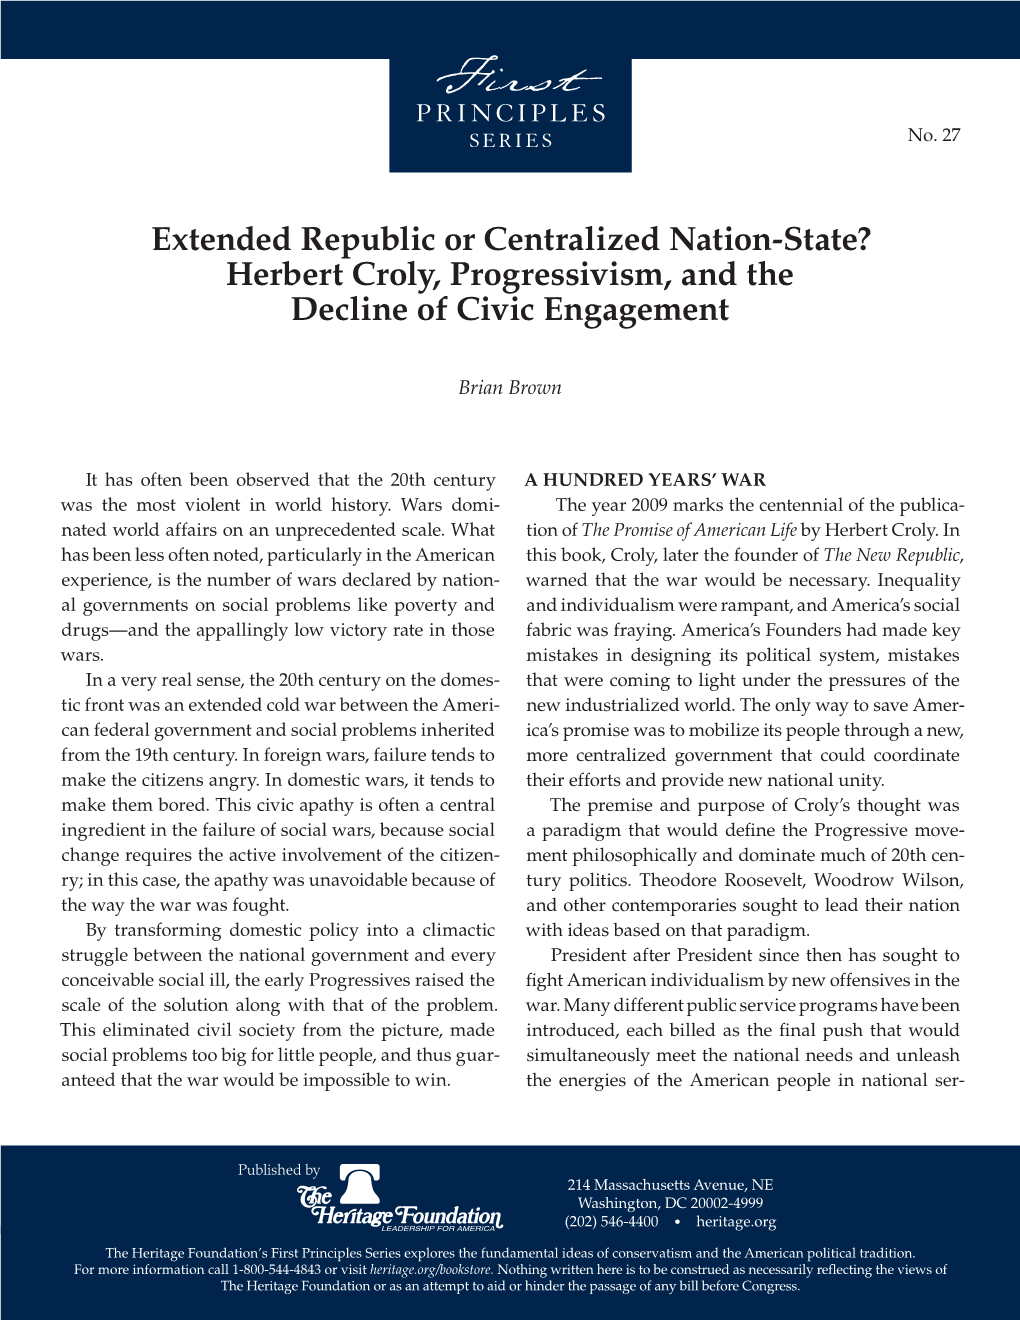 Herbert Croly, Progressivism, and the Decline of Civic Engagement